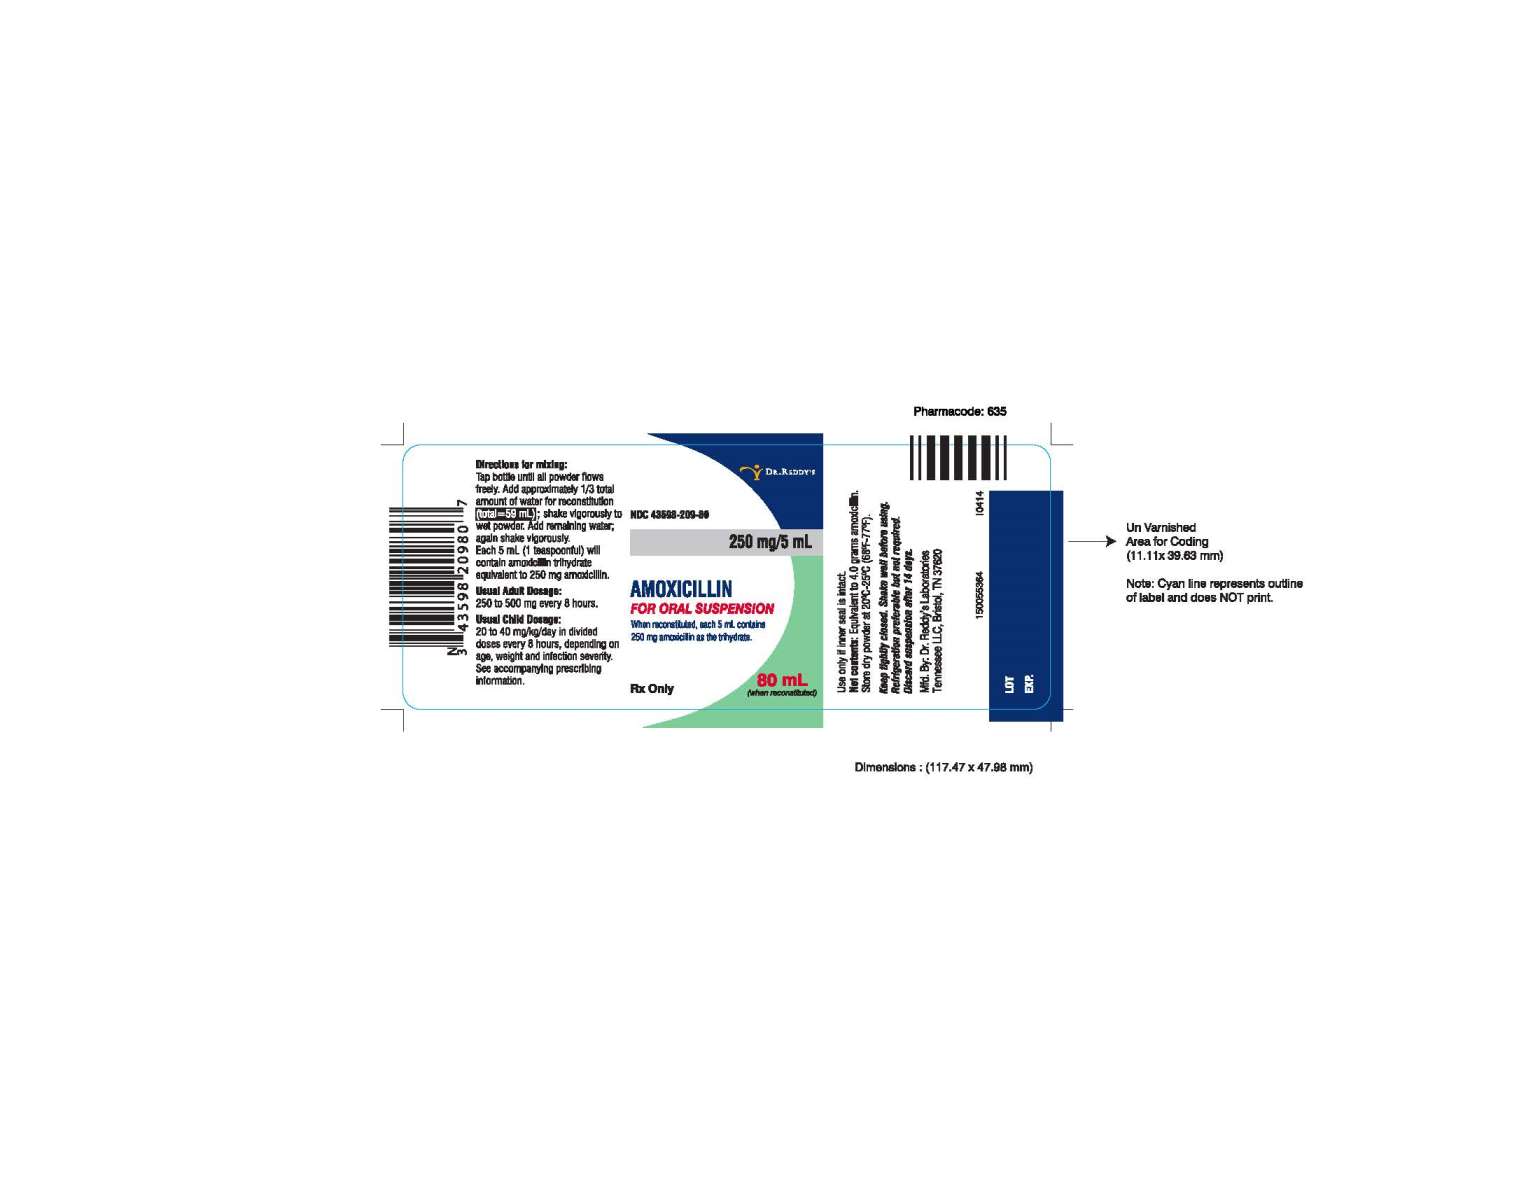 Amoxicillin Powder for Oral Suspension Label Image - 250 mg/5 mL, 80 mL